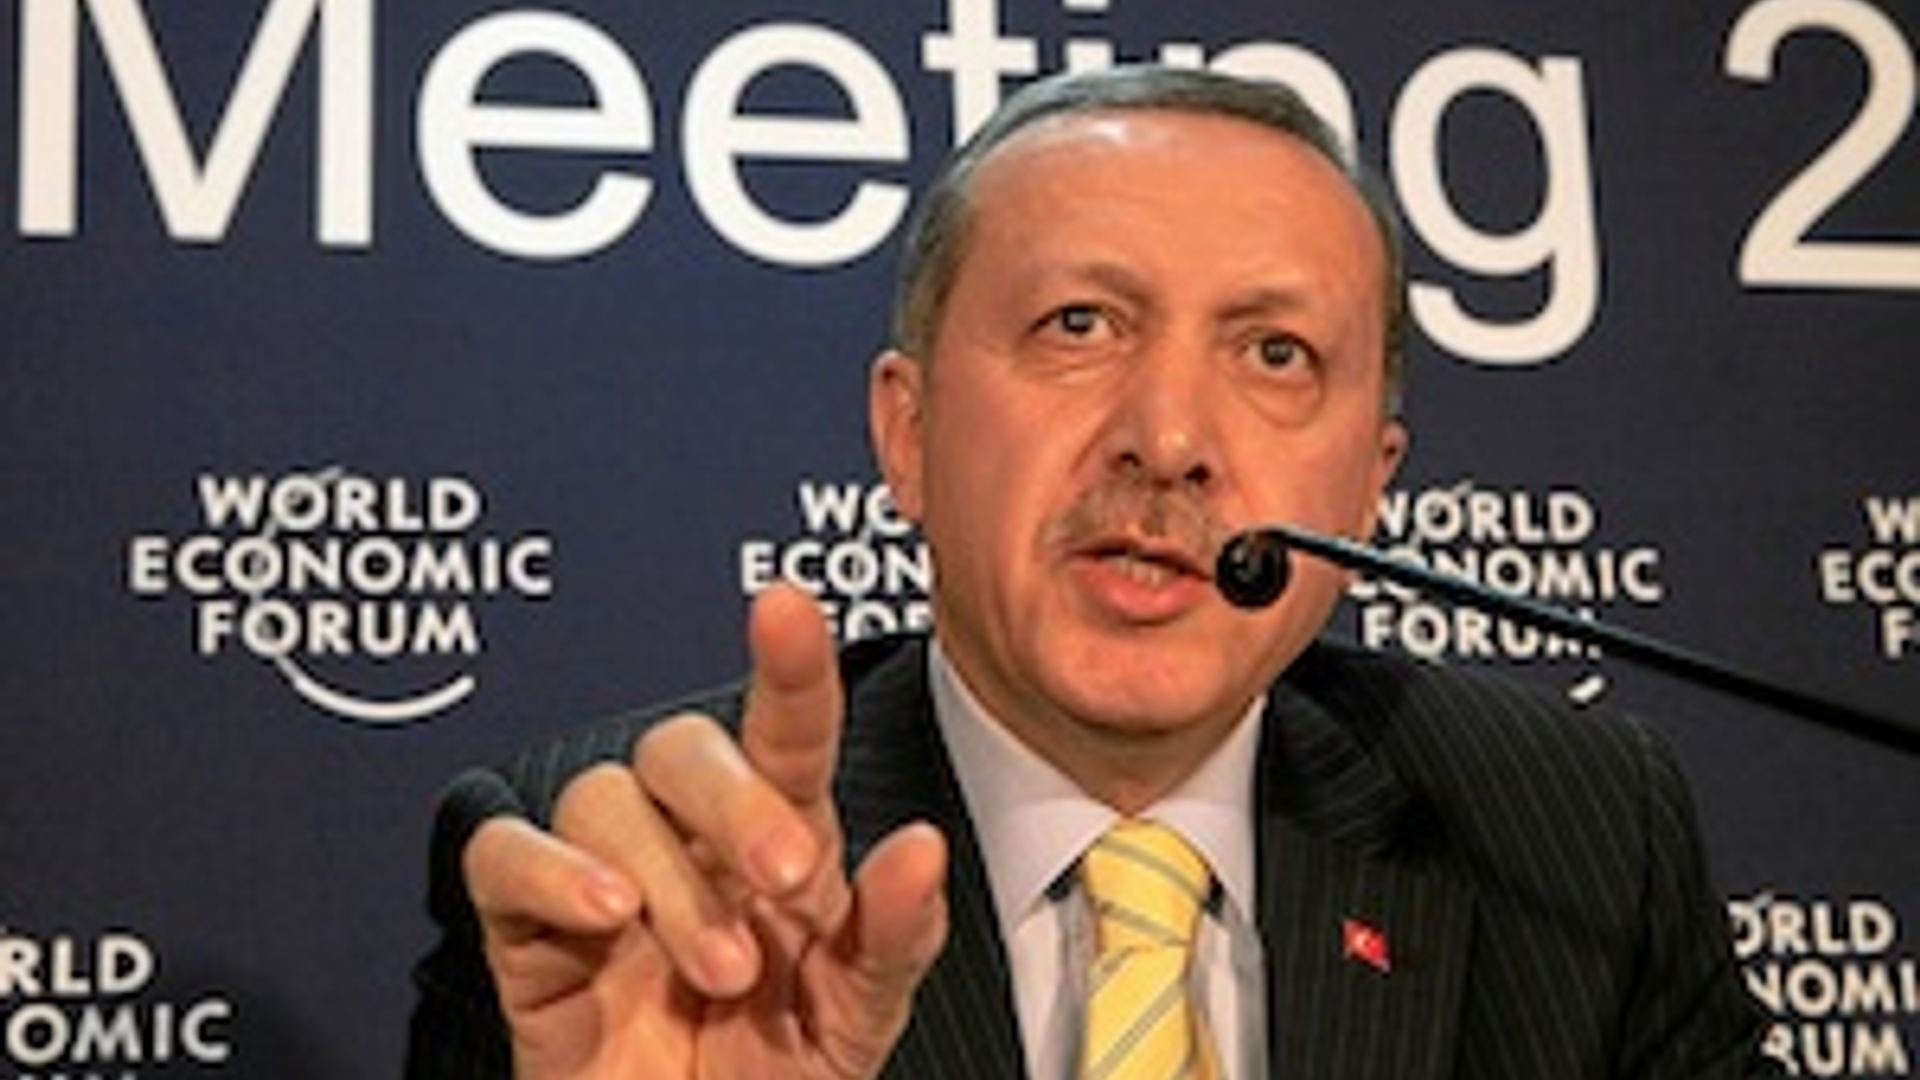 RTEmagicC_erdogan.jpg